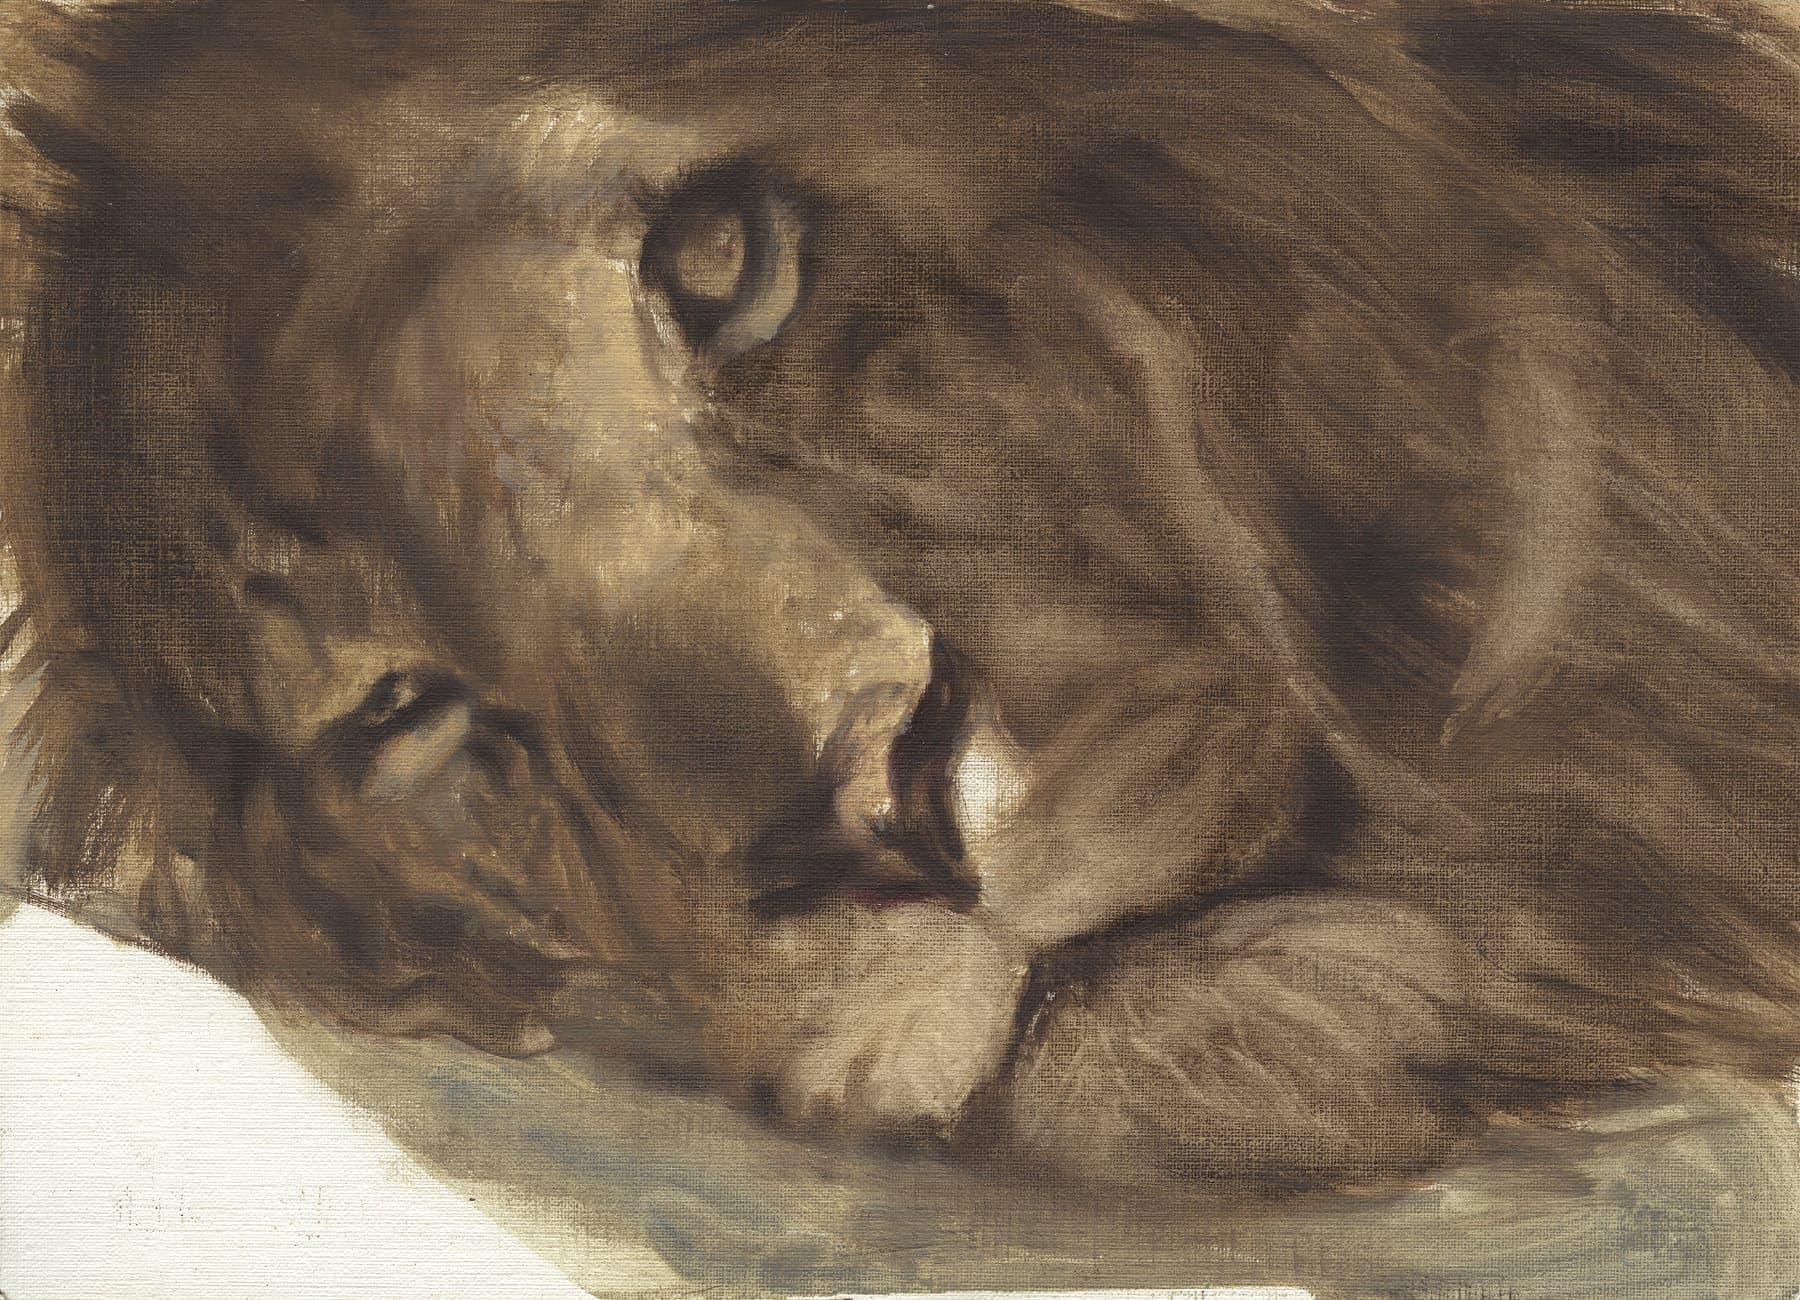 Cuadro de Leon (Panthera leo)